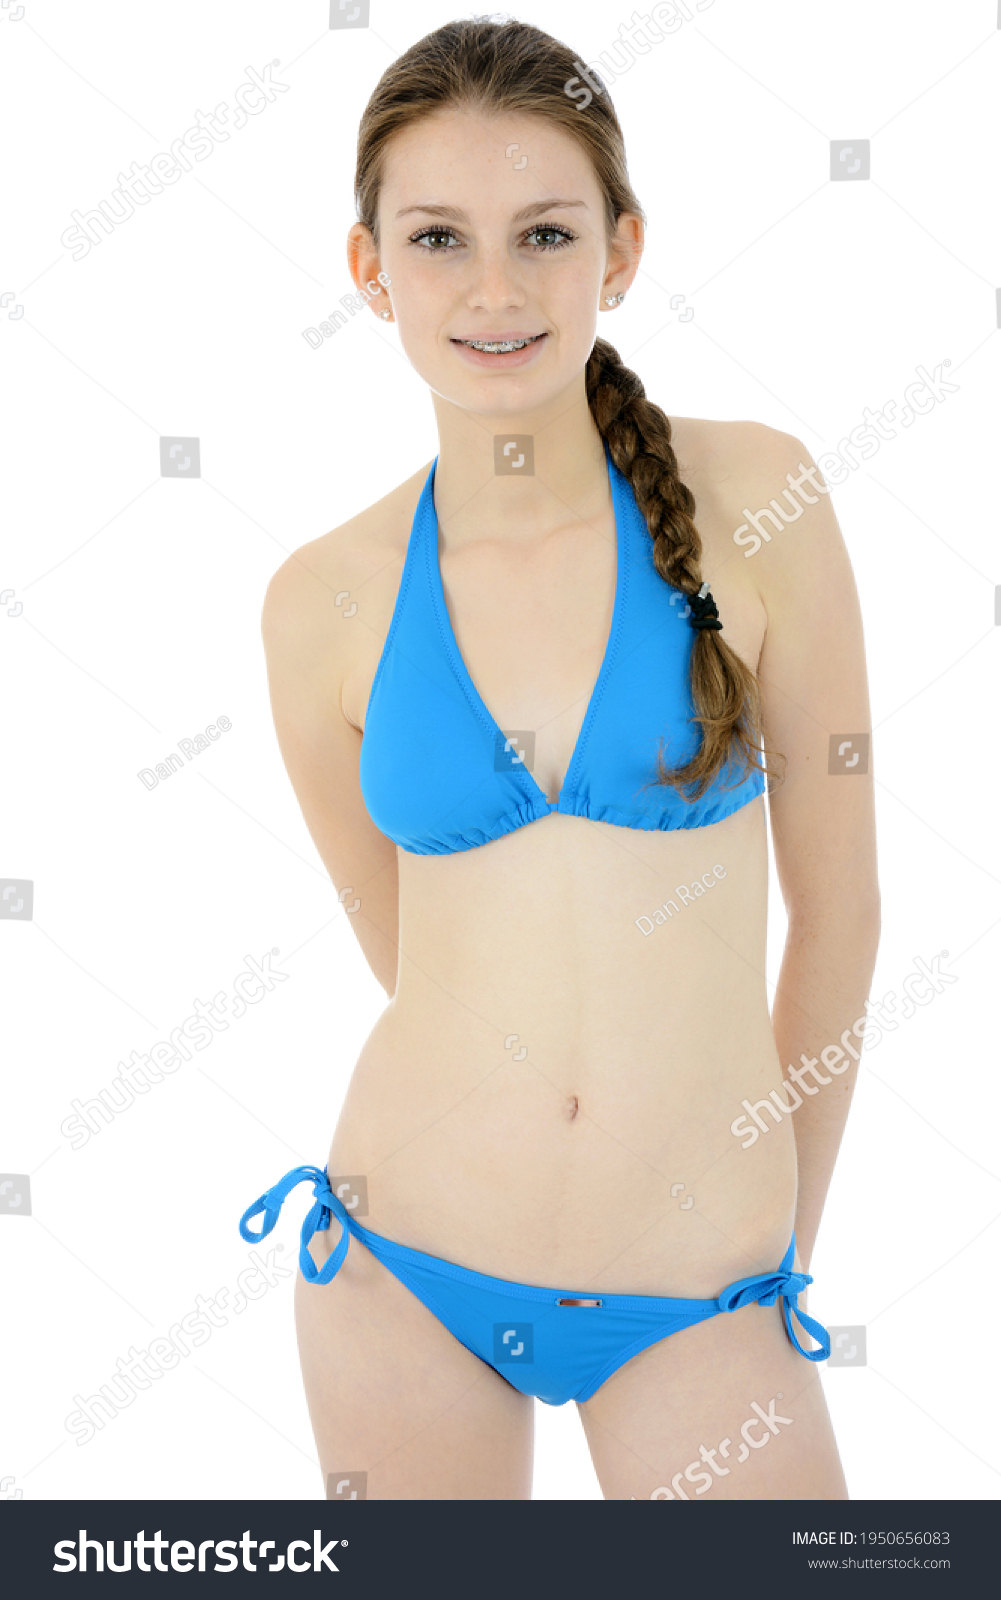 mount proposition prediction 21,455 Bikini teenager Images, Stock Photos & Vectors | Shutterstock